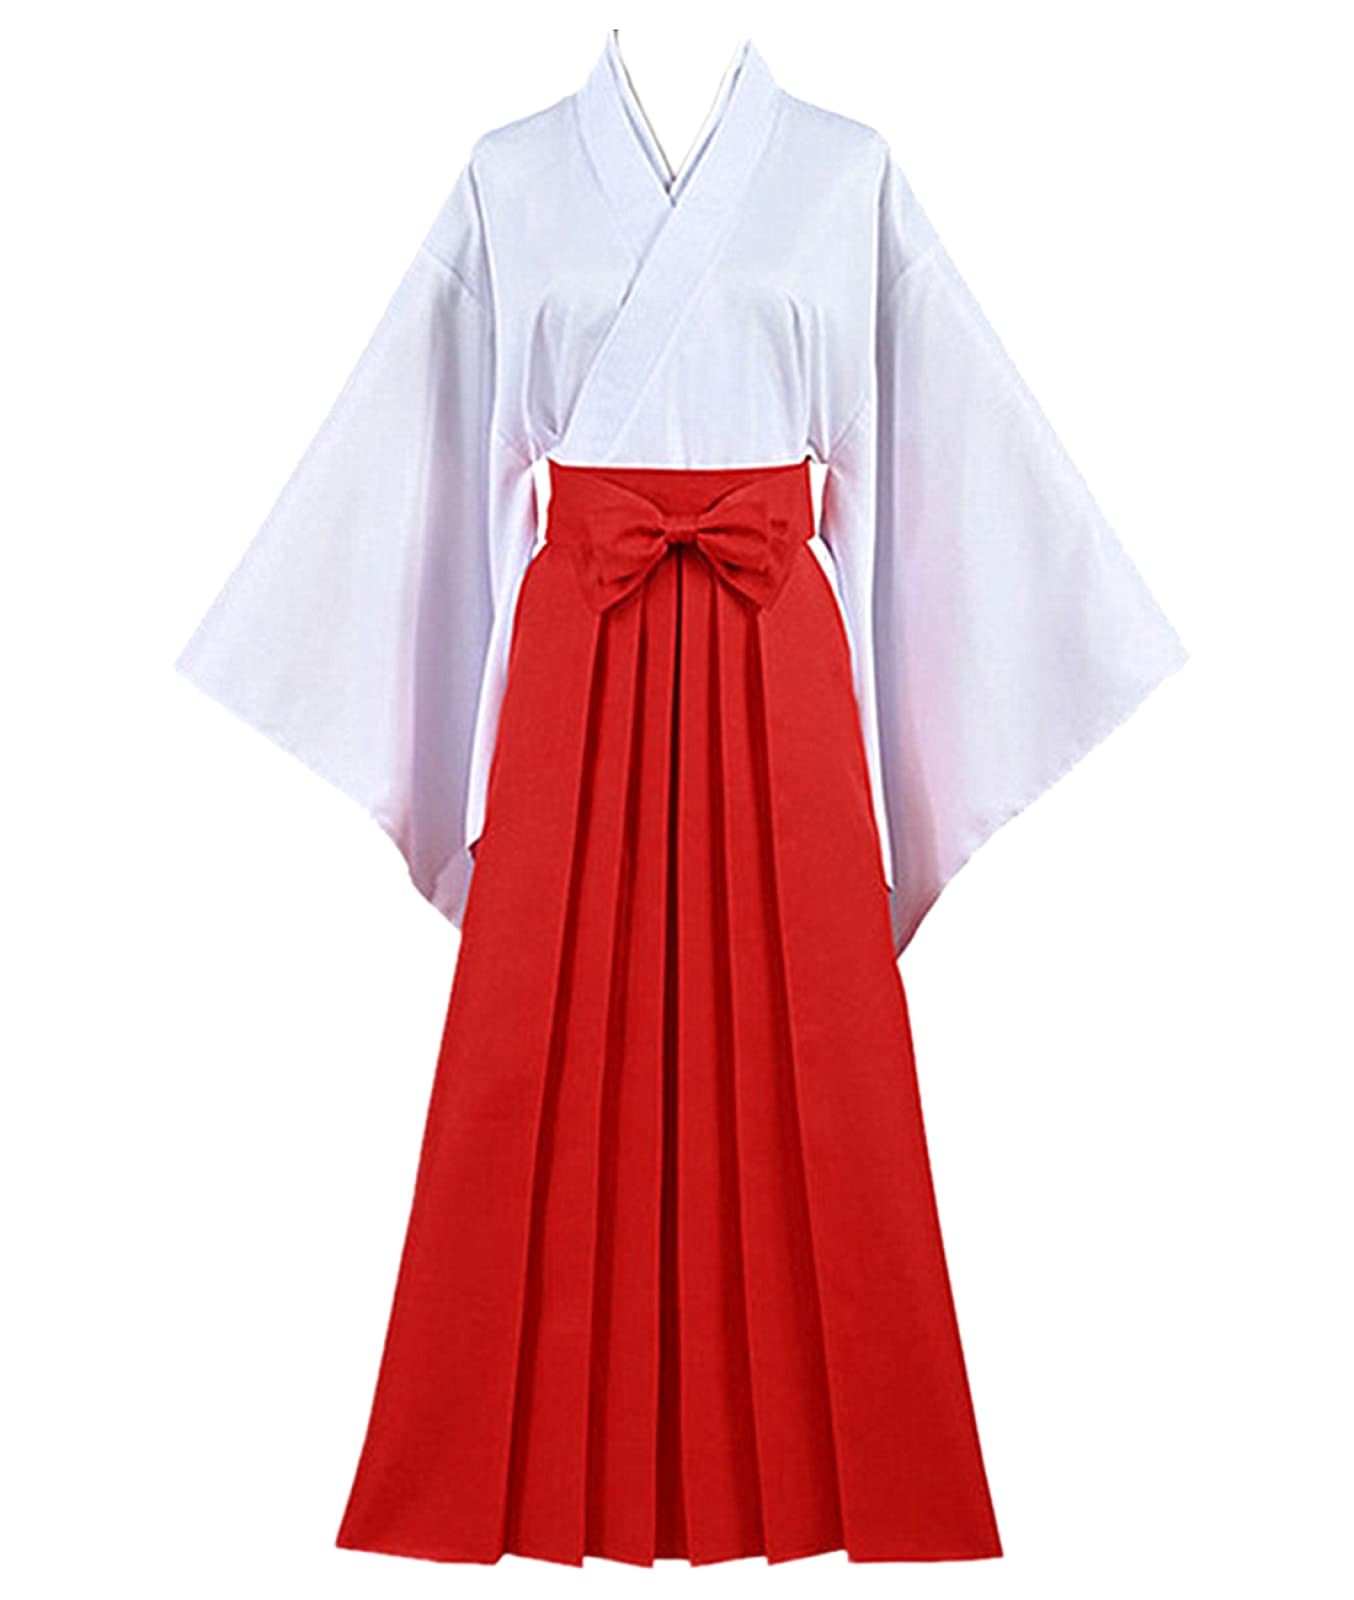 Jujutsu Kaisen Cosplay Iori Utahime Outfits, Damen Kimono Kleid Kostüm Anzug für Anime Fans Cosplay, Rot, L